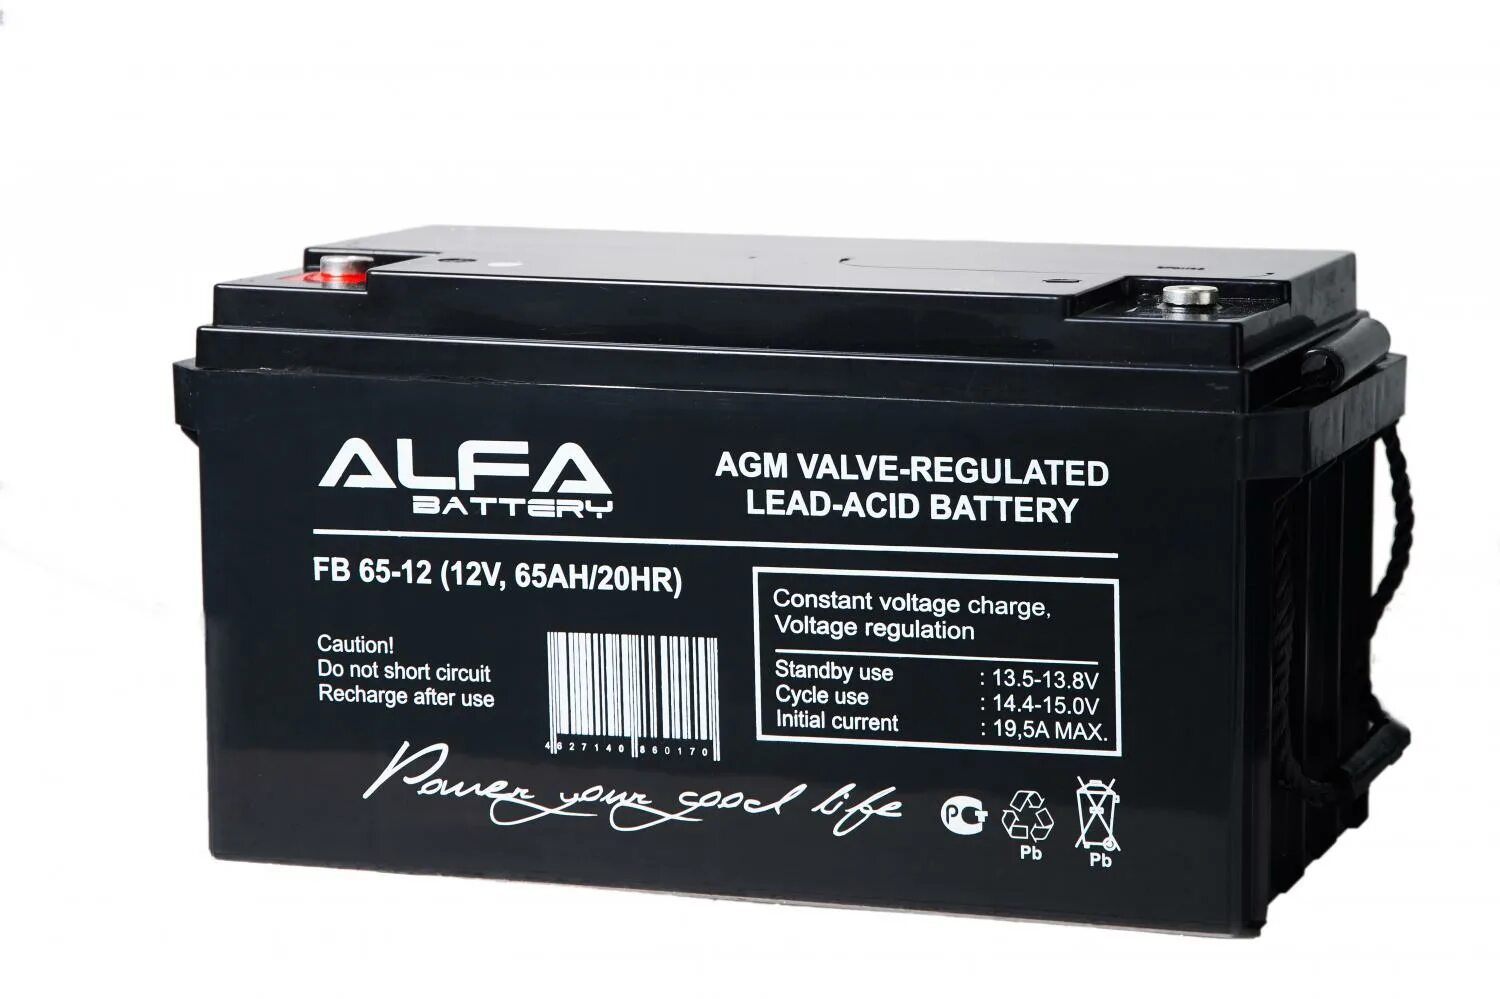 Fb battery. Fb 40-12, аккумулятор Alpha Battery (12в, 40ач / 12v, 40ah). Аккумуляторная батарея Alfa Battery fb 65-12. Аккумулятор fb7.2-12 Alpha. АКБ fb 65ah.